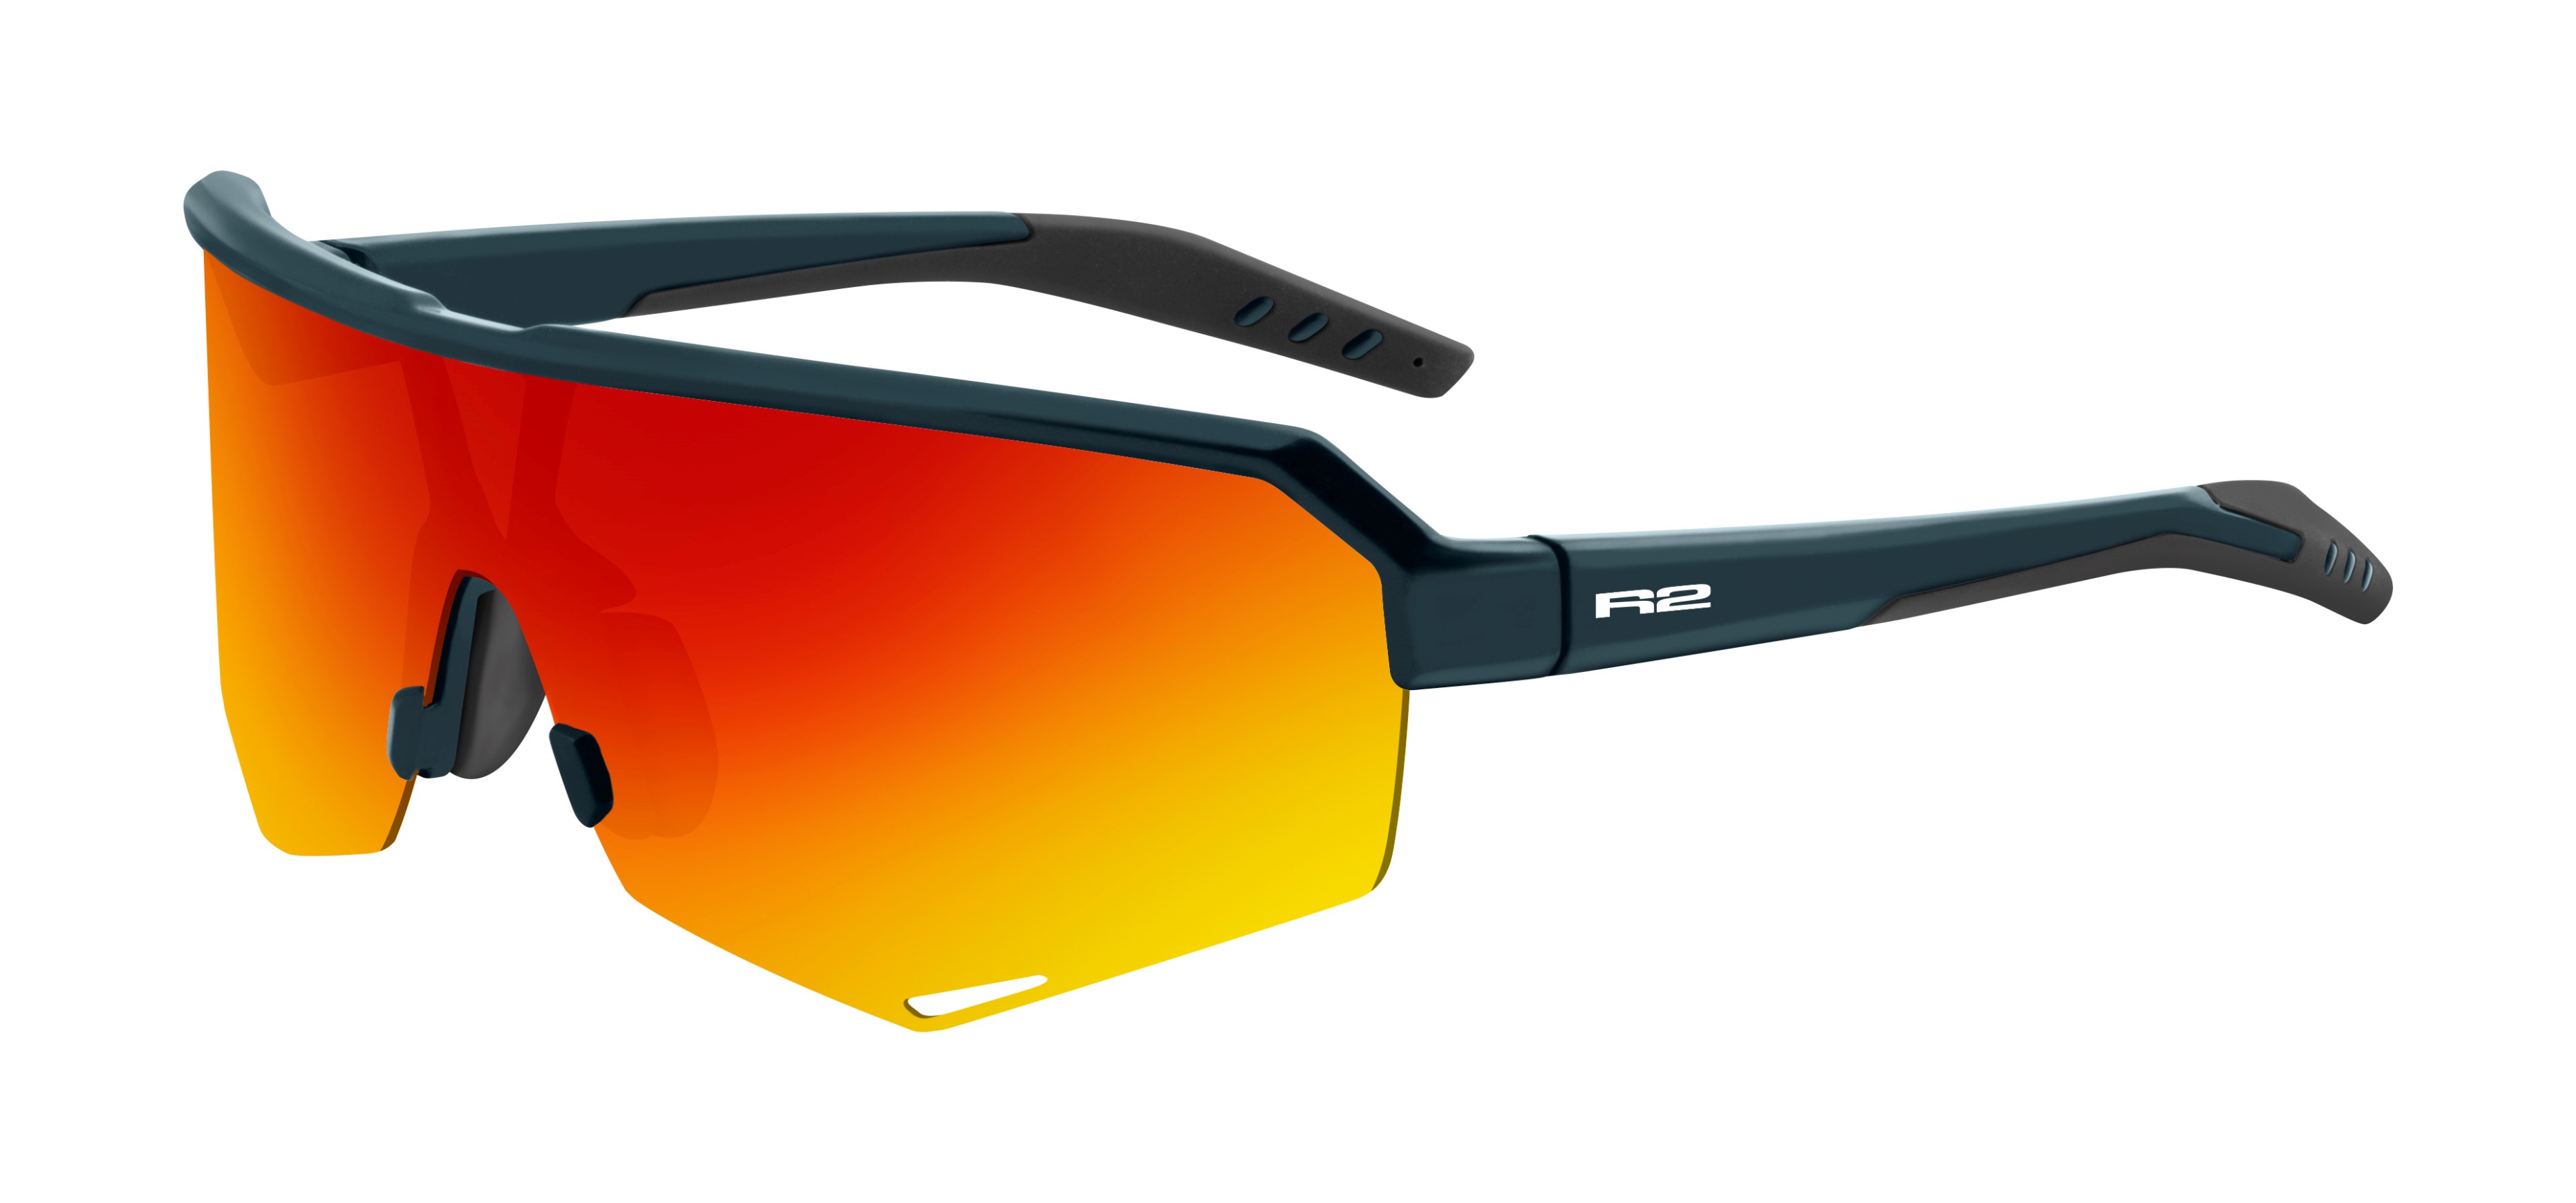 Sport sunglasses R2 FLUKE AT100F